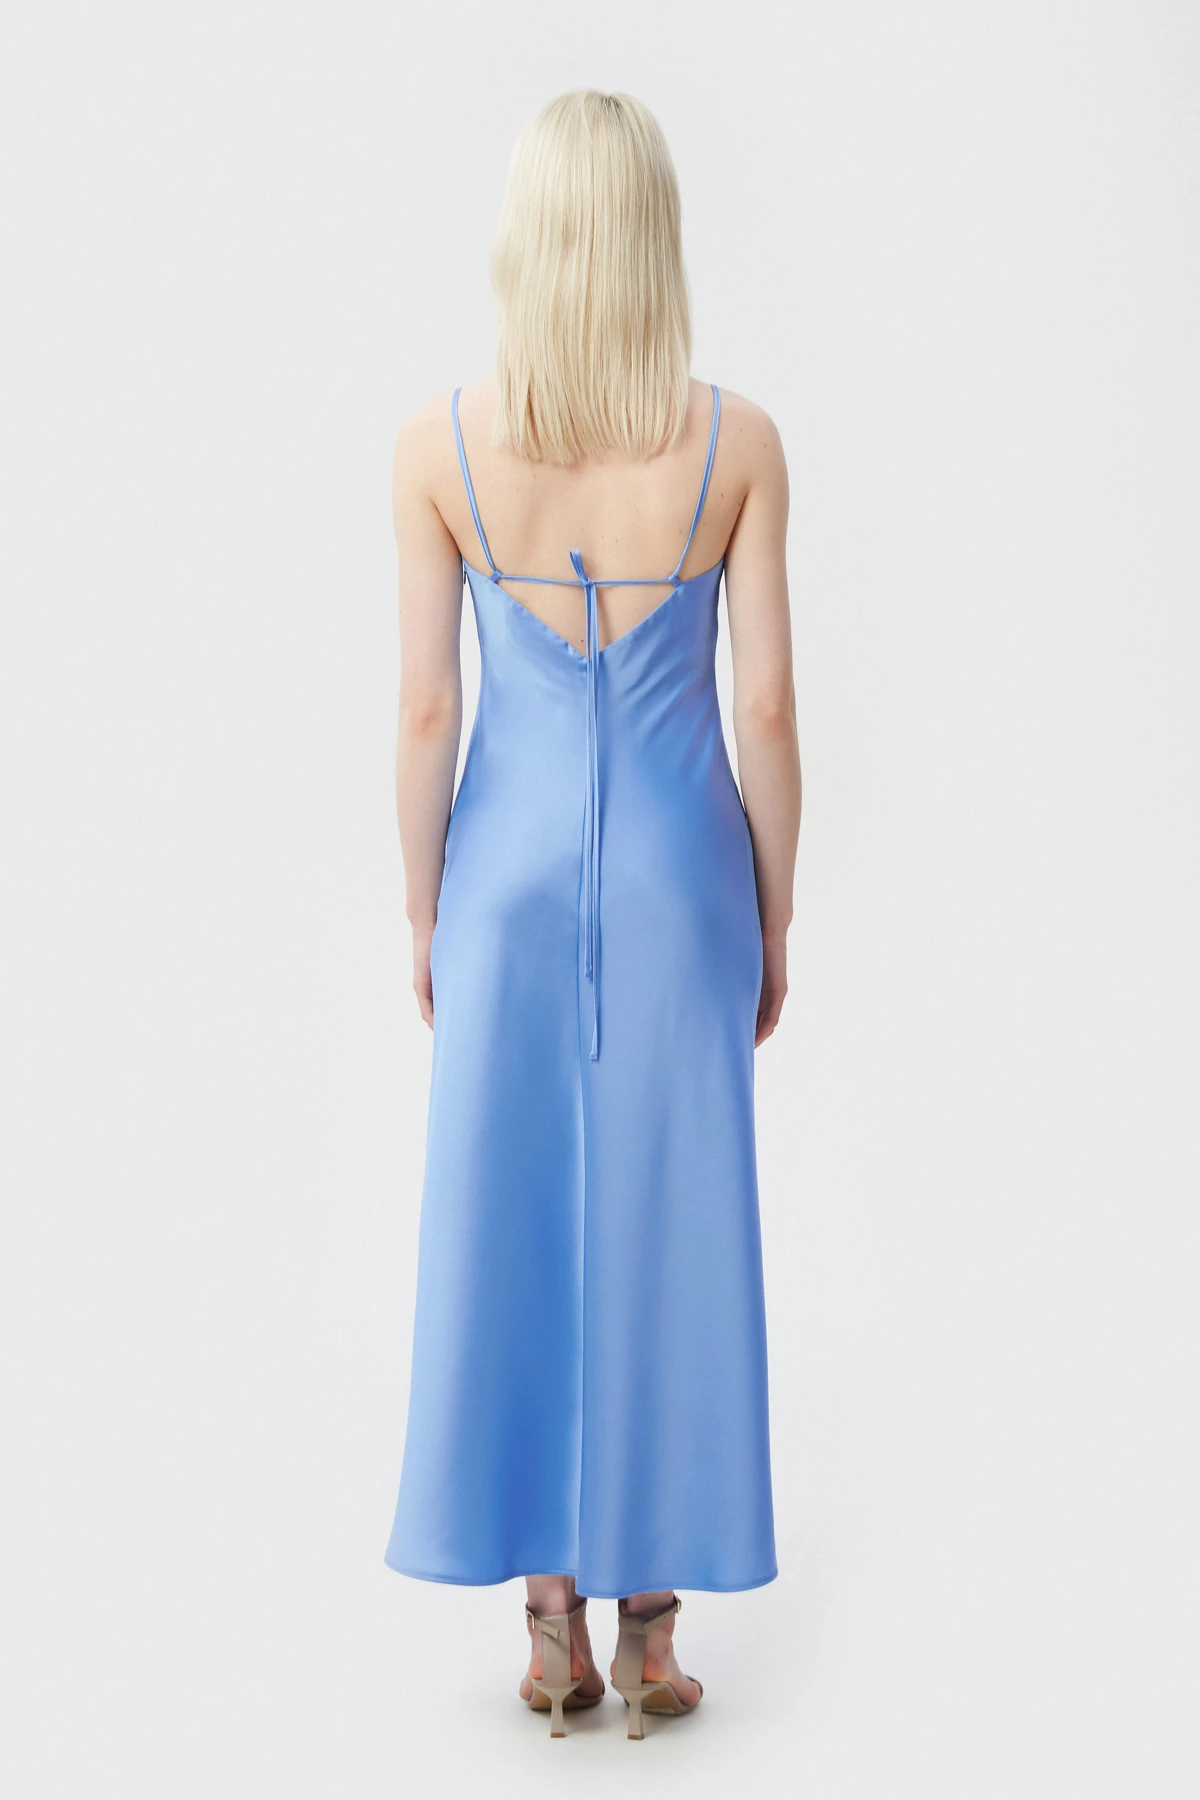 Blue satin open-back dress, photo 5